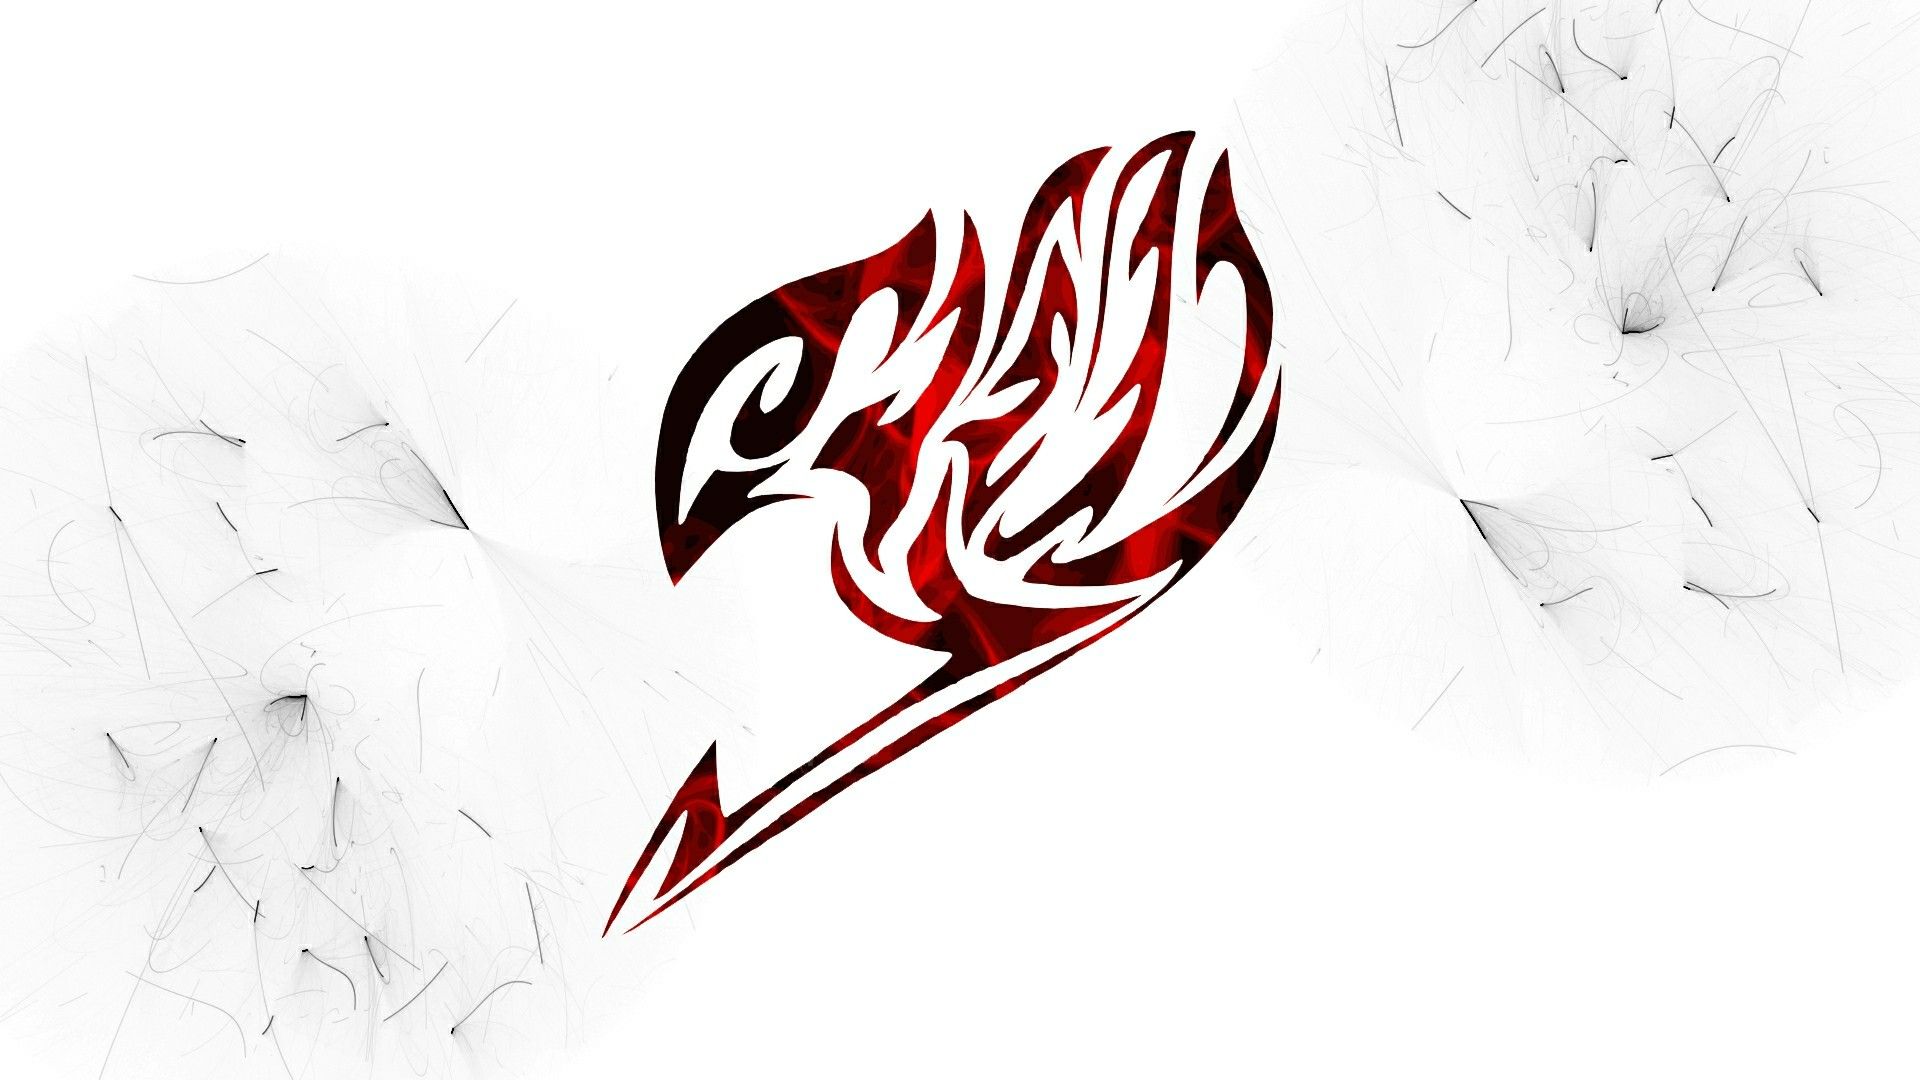 Fairy Tail emblem design. Fairy tail logo, Fairy tail tattoo